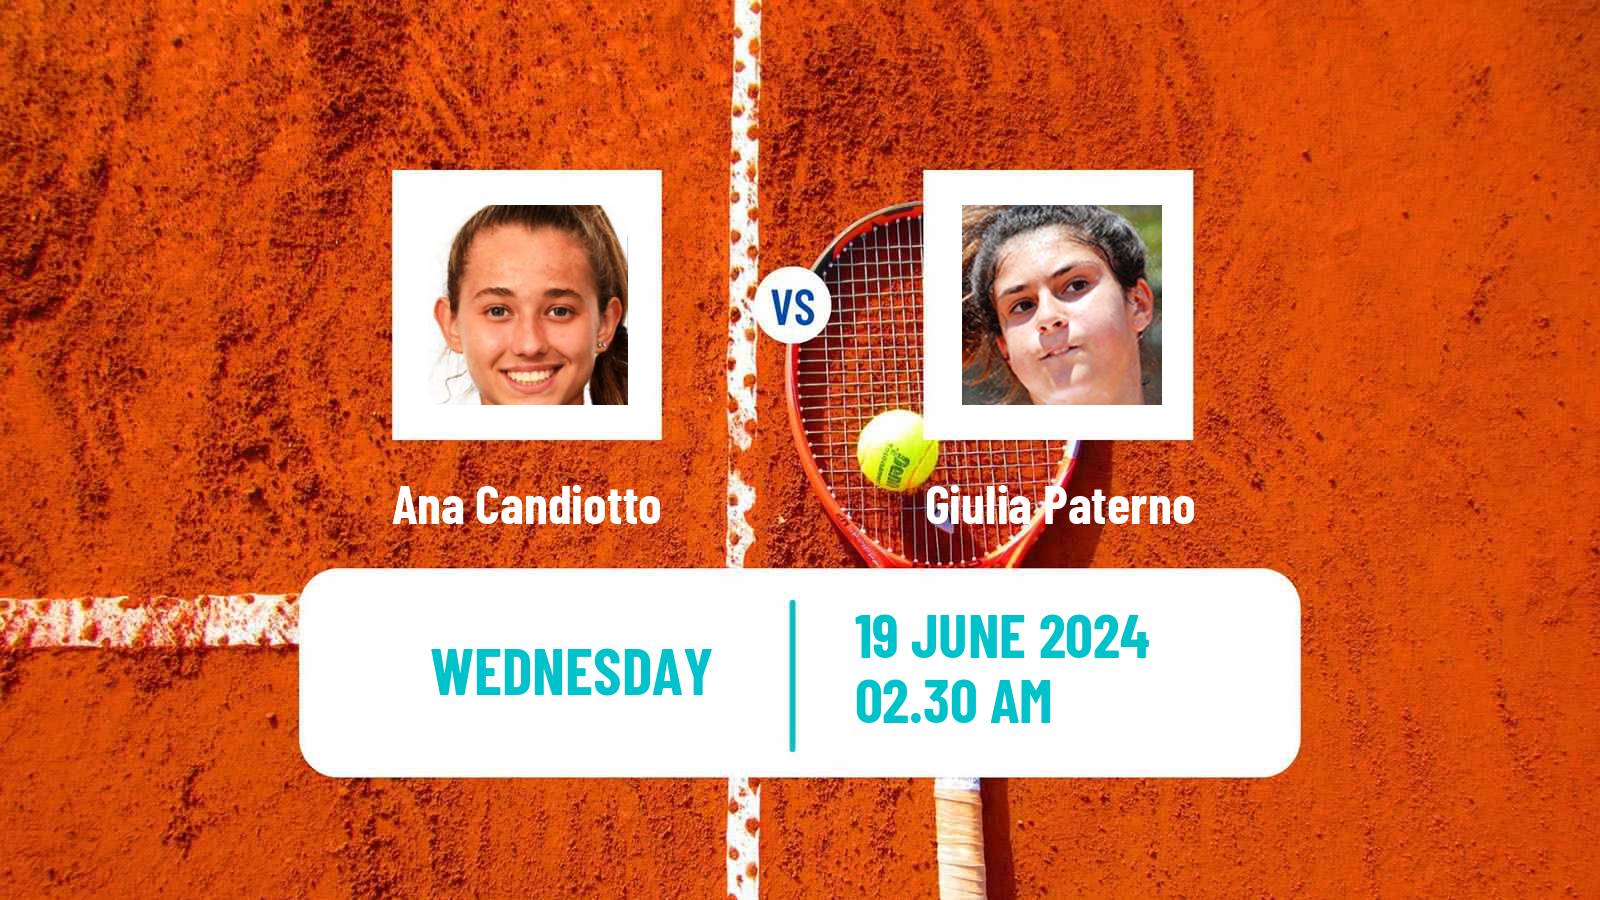 Tennis ITF W15 Bucharest 3 Women Ana Candiotto - Giulia Paterno